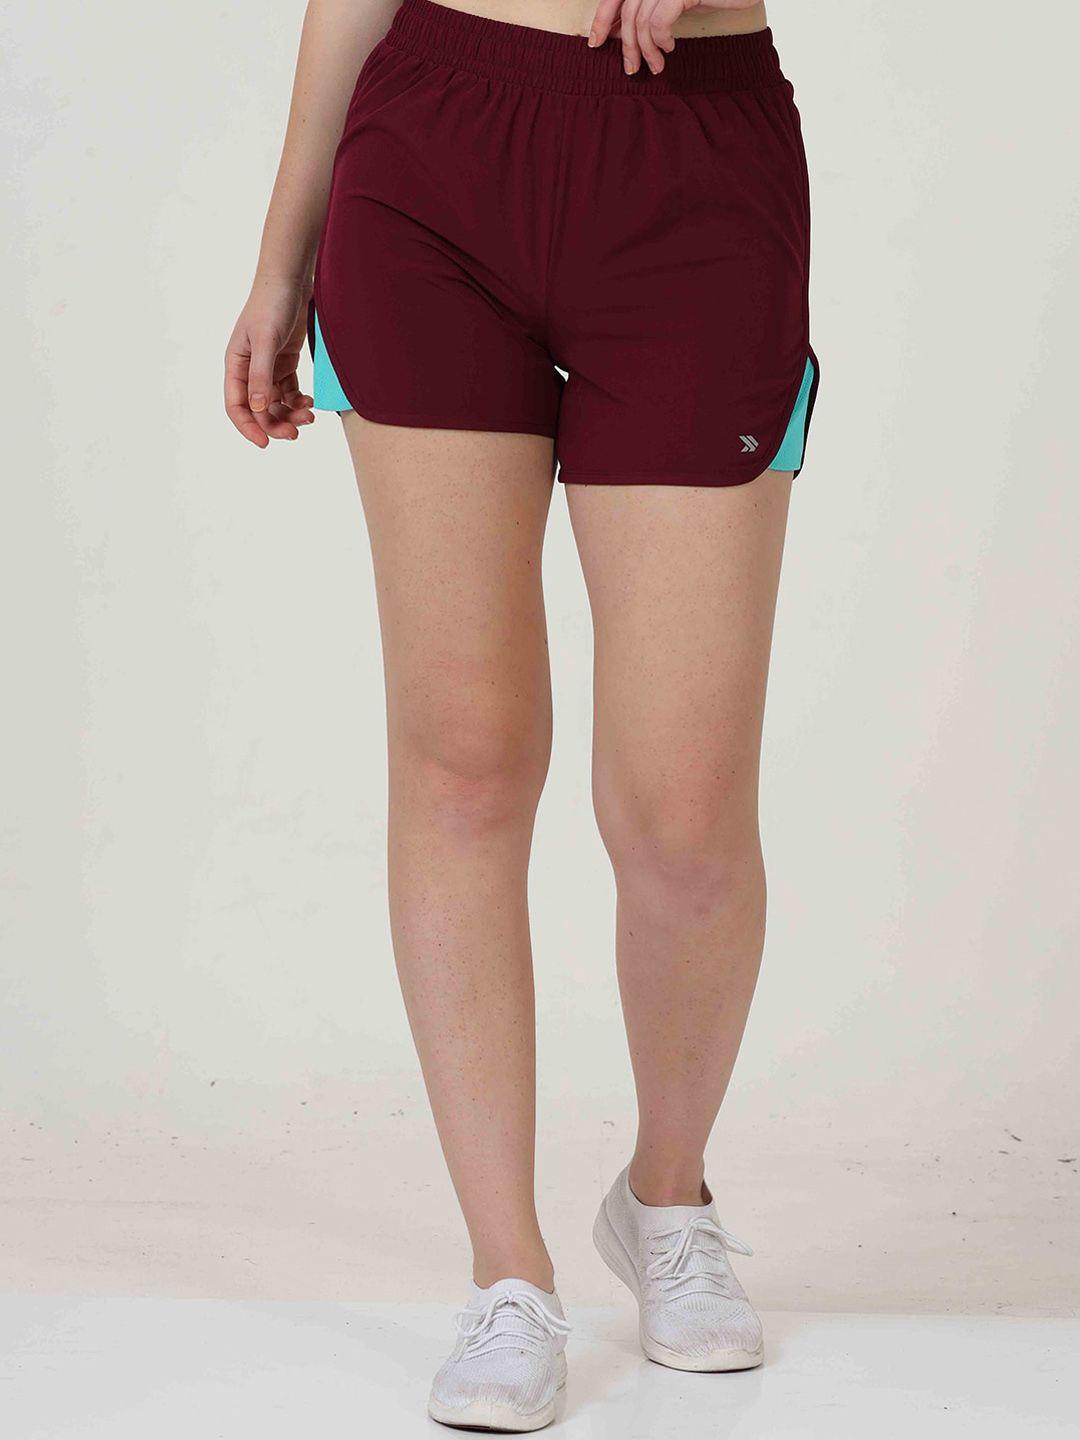 jolger women mid rise sports shorts